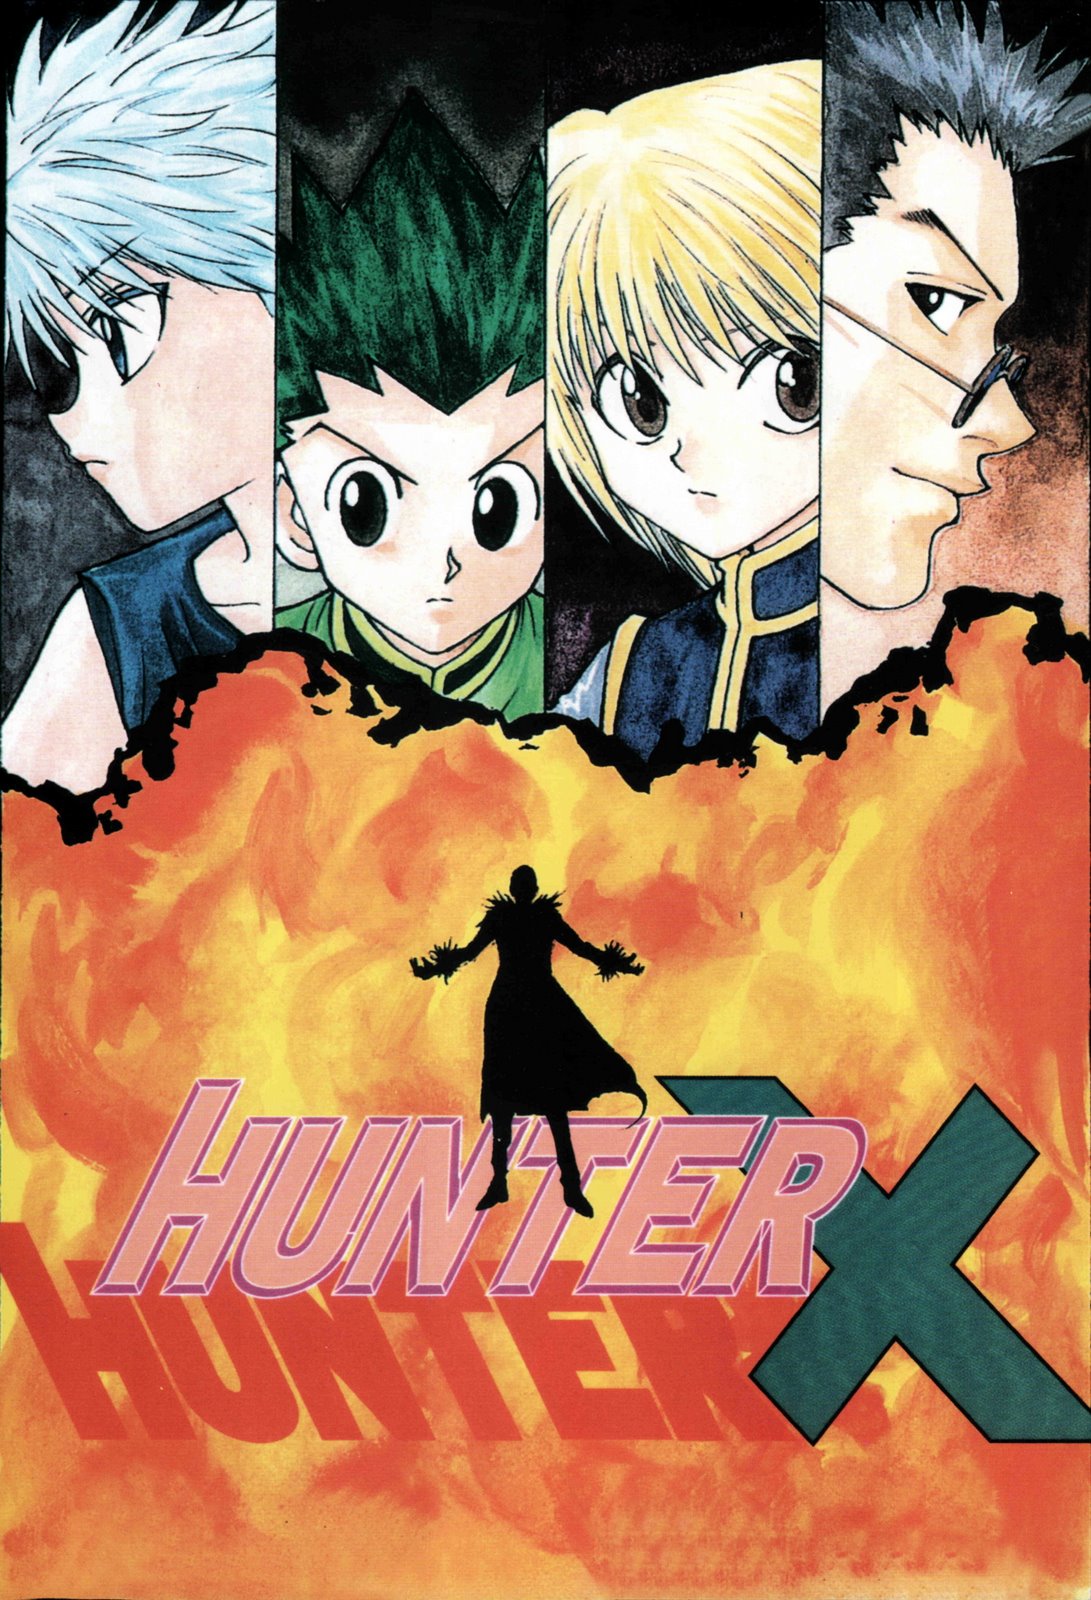 The 25 Most Anticipated Manga Ending Haruhichan.com Hunter x Hunter manga cover